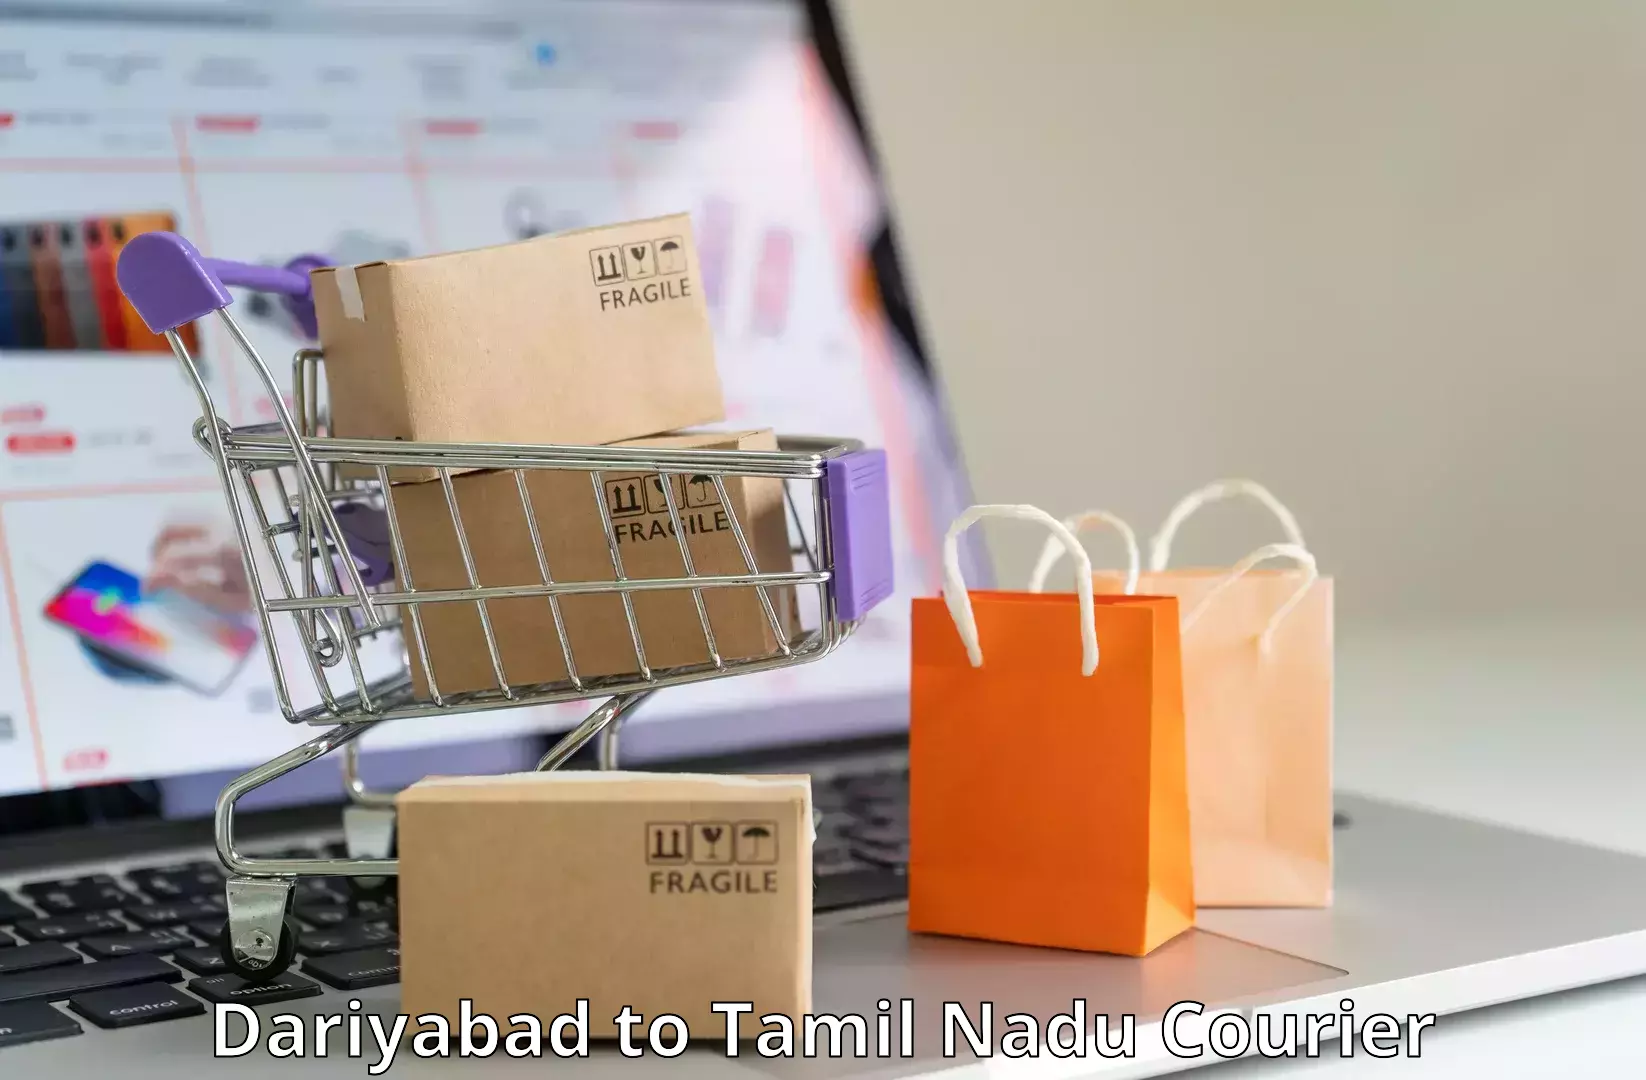 Premium courier solutions Dariyabad to Polur